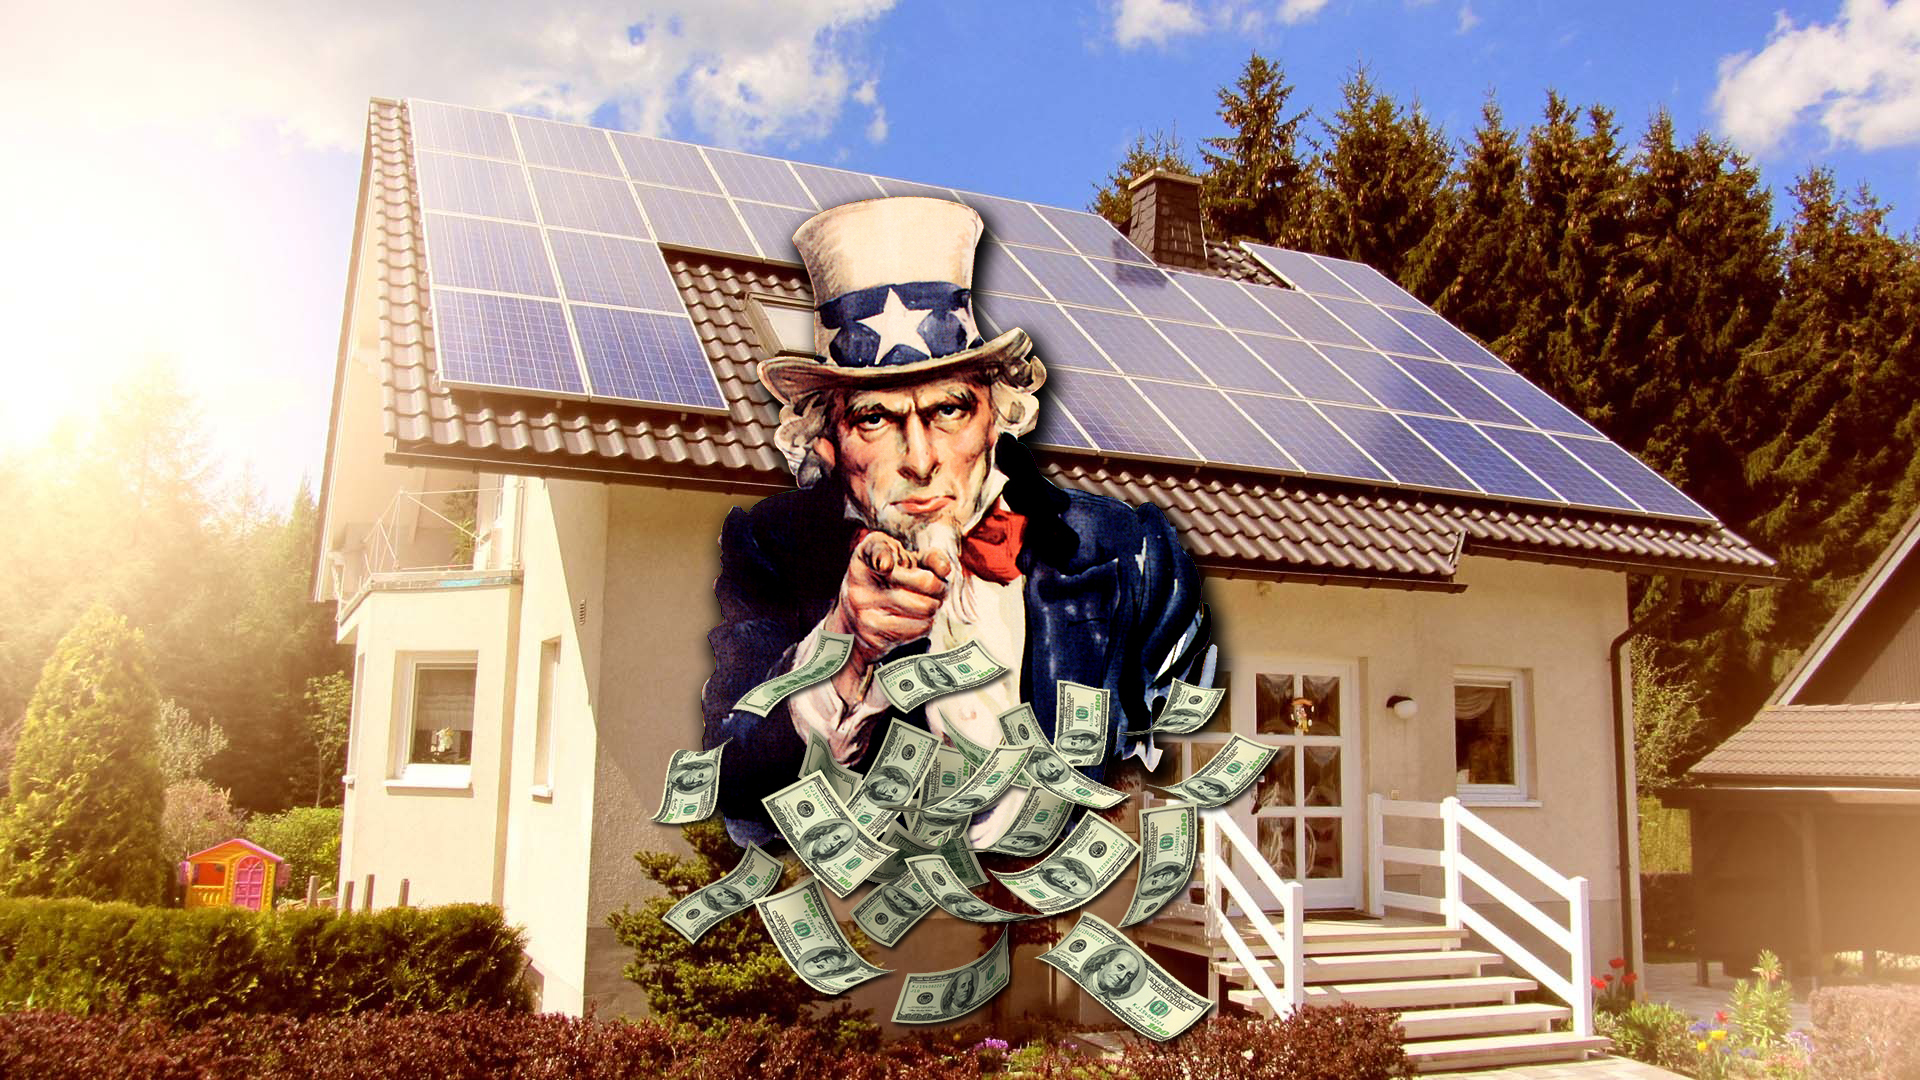 Solar panels 100% free – saving money or environmental protection?